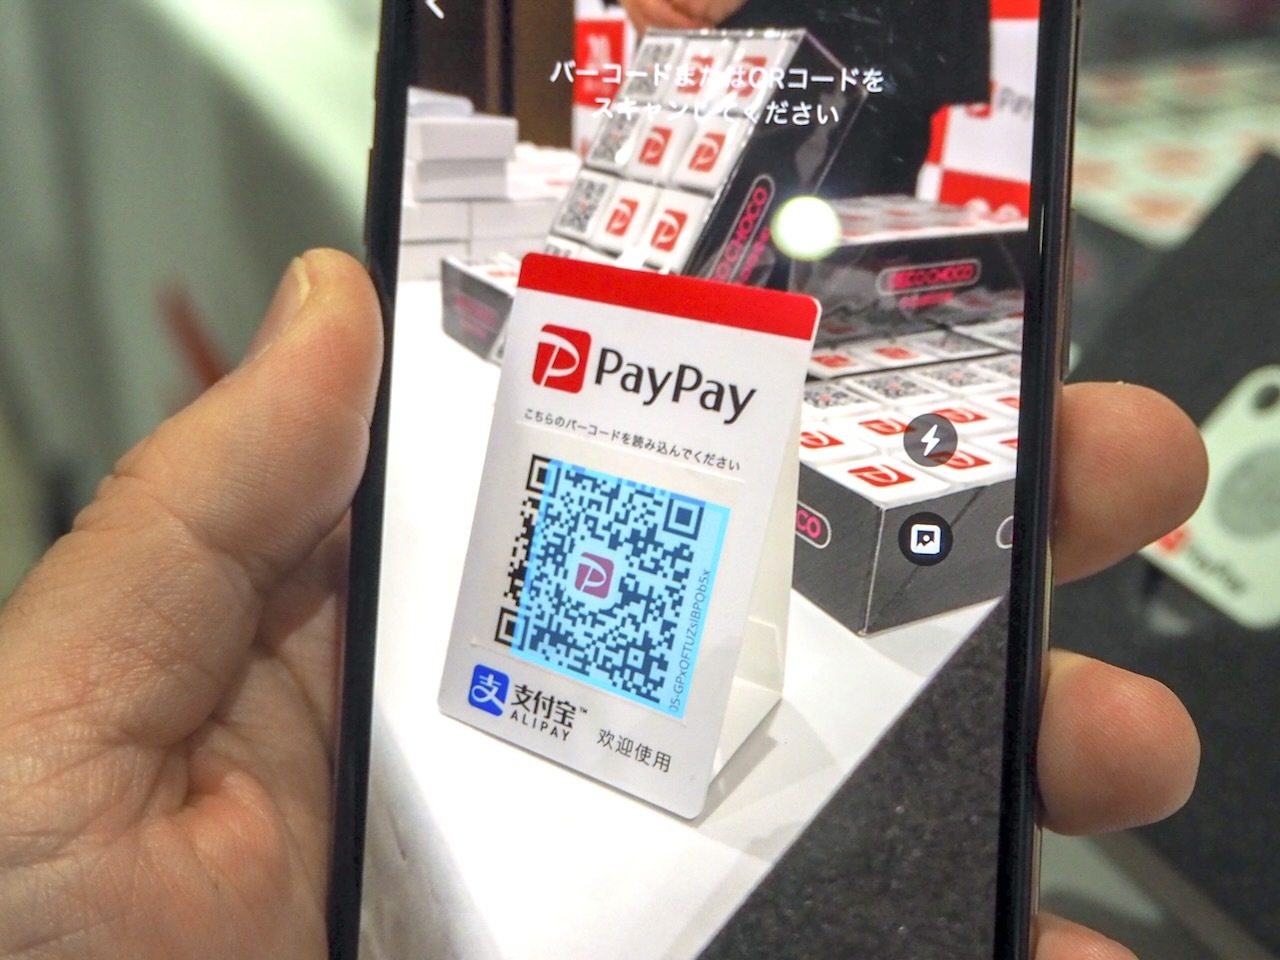 PayPayが「改悪」せざるを得なかった裏事情 - (page 3) - CNET Japan